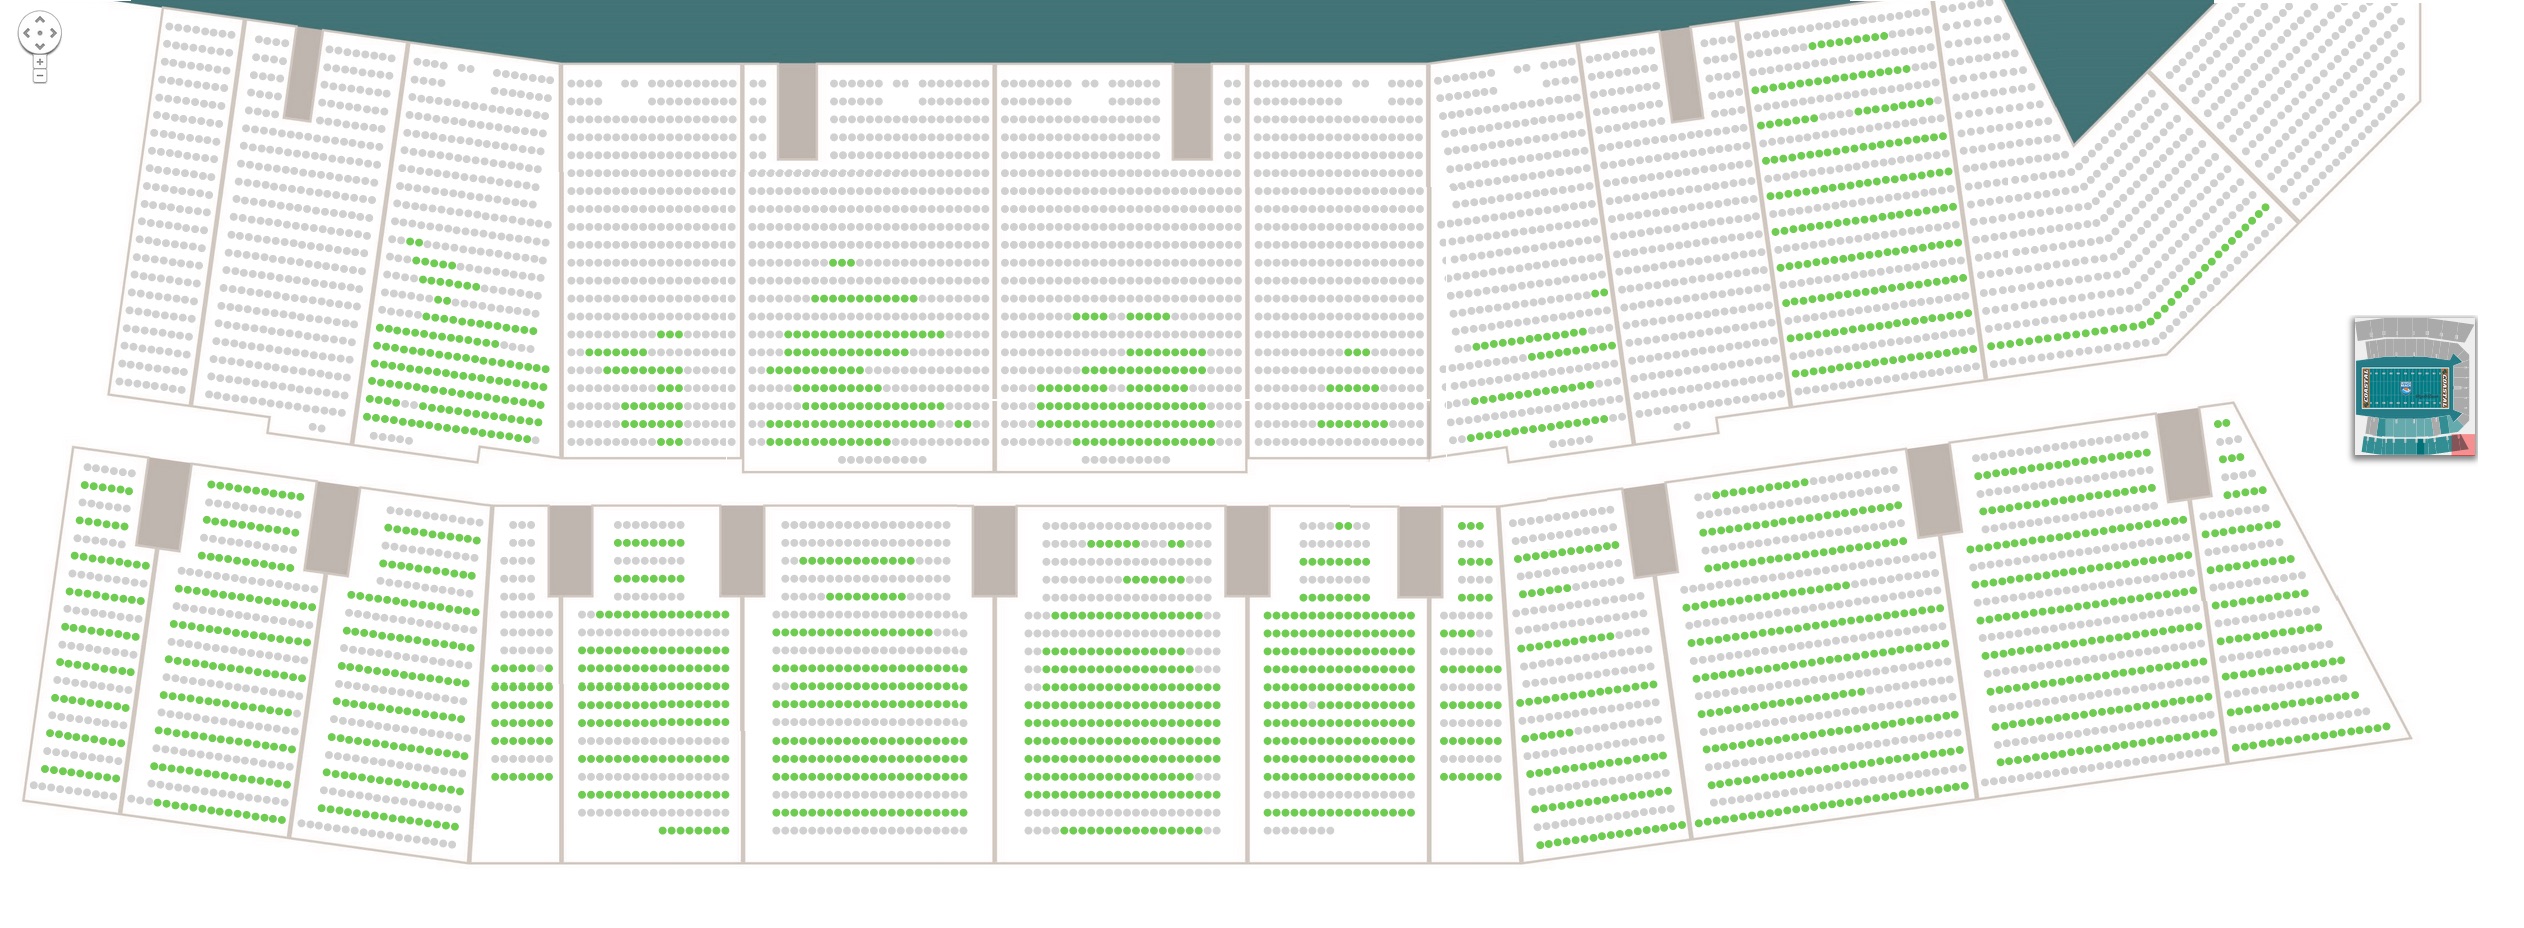 seats bought- Dec 8.jpg